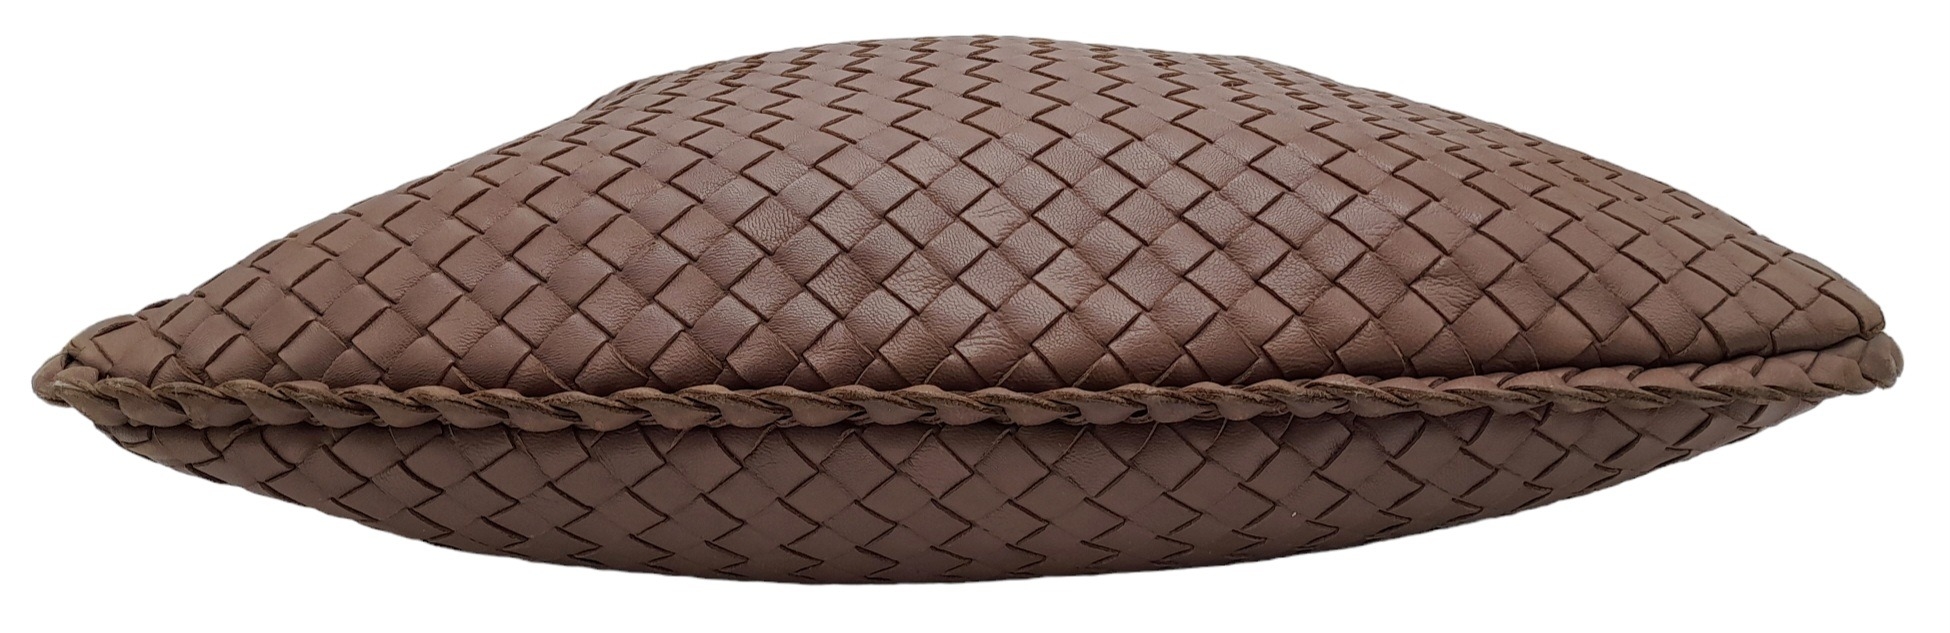 A Bottega Veneta Brown Bag. Intrecciato leather exterior with gold-toned hardware, single handle/ - Image 5 of 8